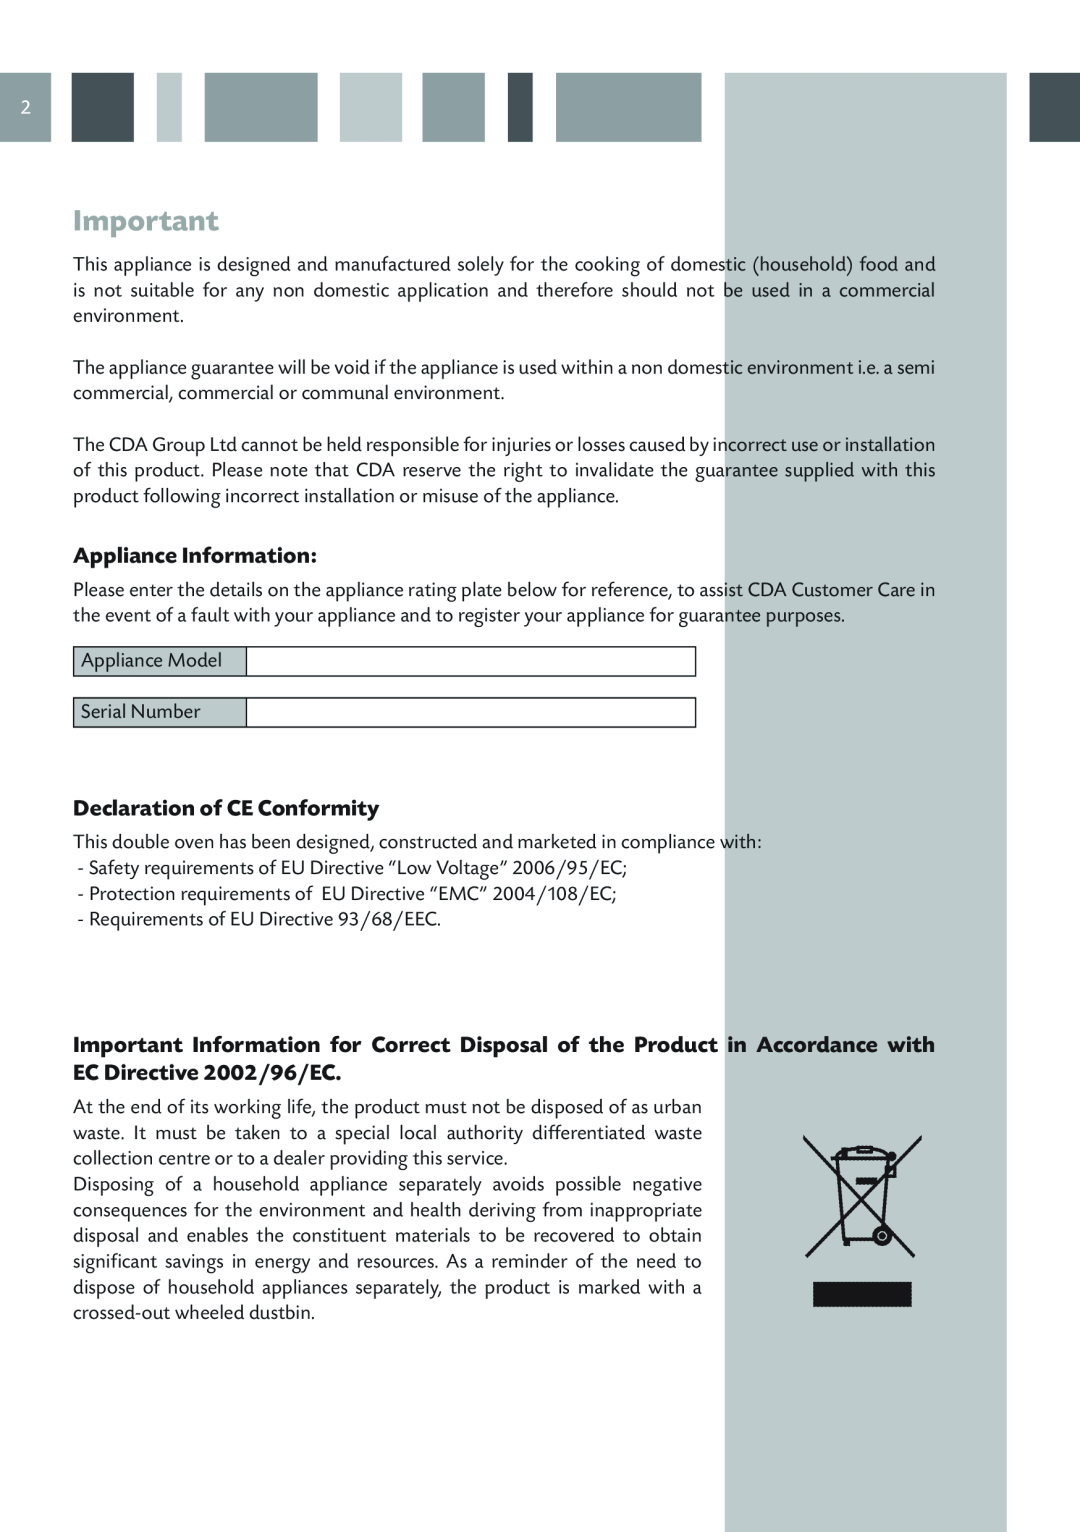 CDA DV 770 manual Appliance Information, Declaration of CE Conformity 